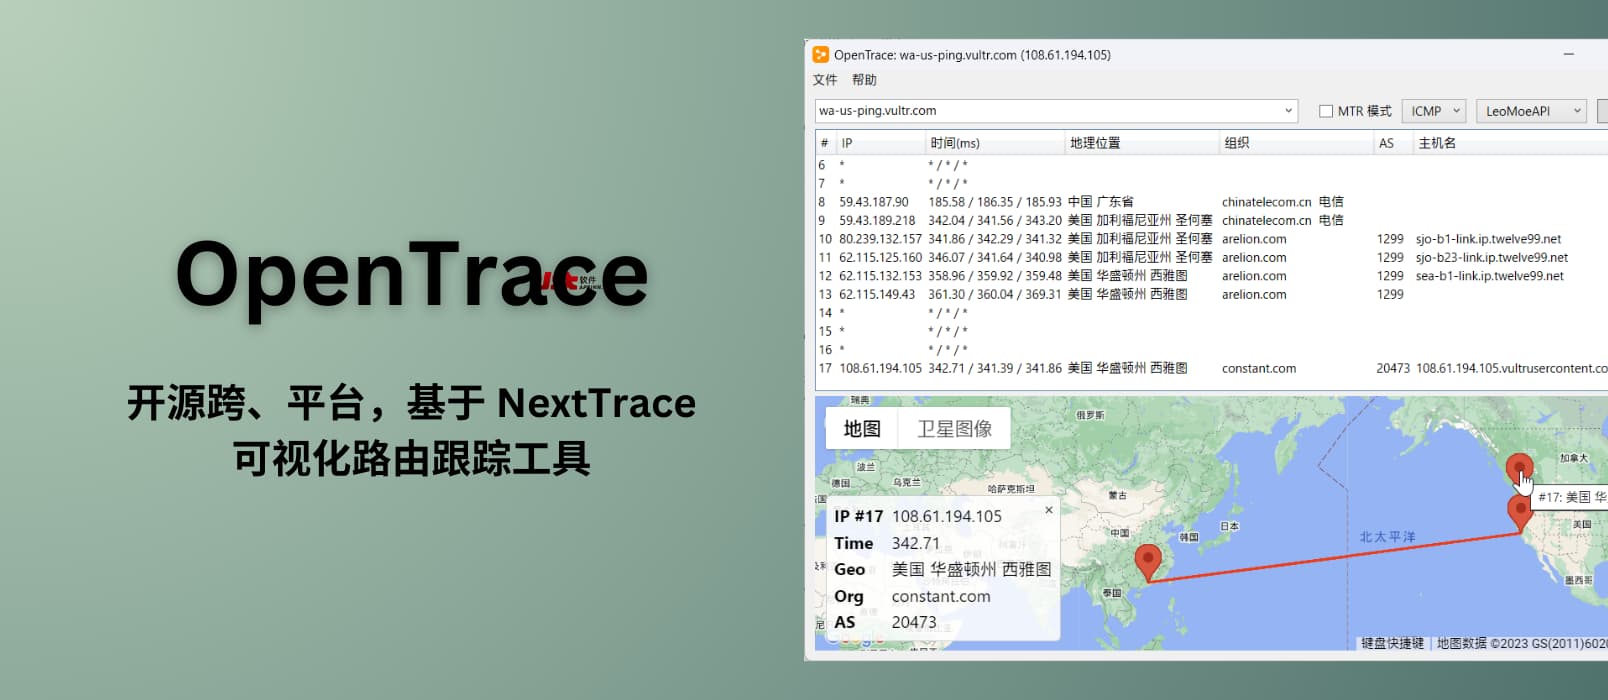 OpenTrace - 开源跨、平台，基于 NextTrace，可视化路由跟踪工具，在地图上追踪并显示 IP 地址